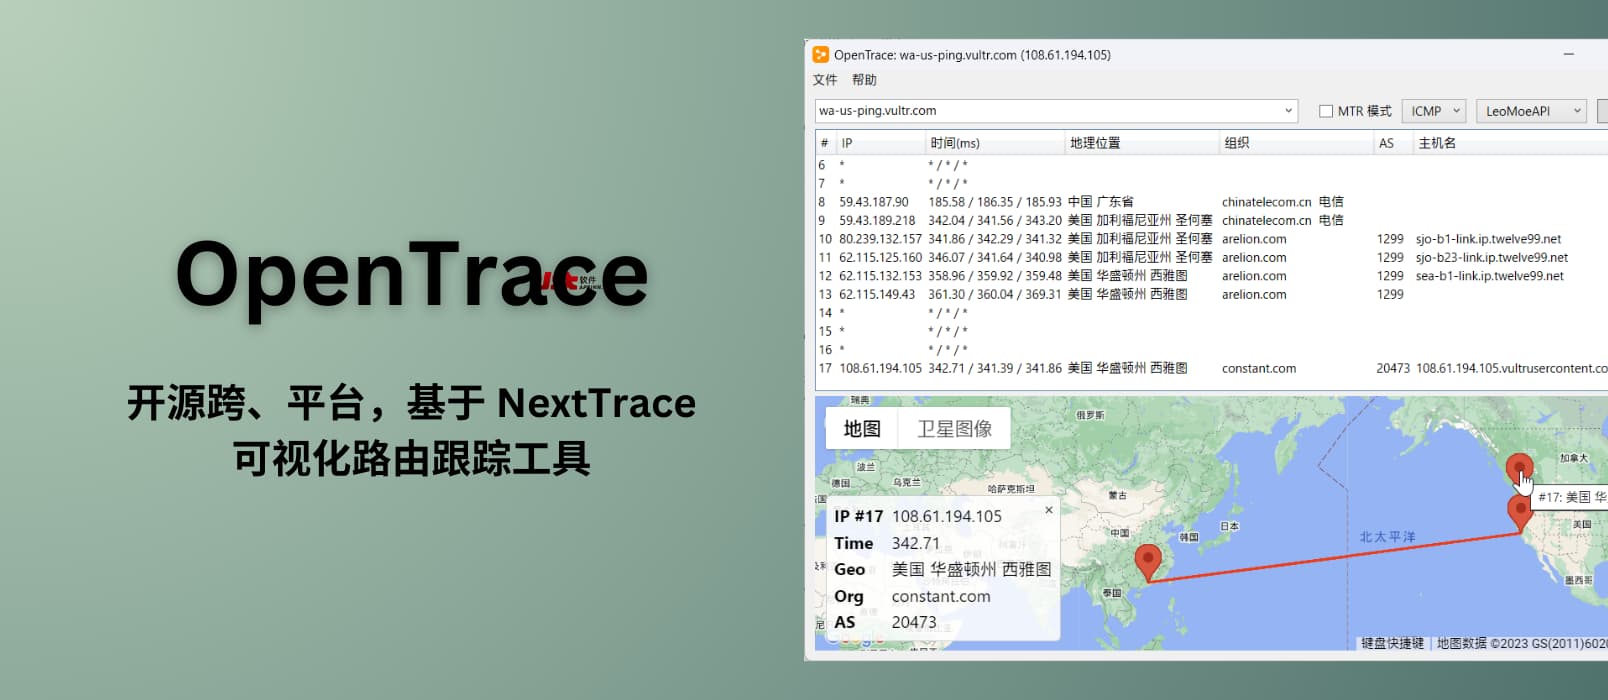 OpenTrace - 开源跨、平台，基于 NextTrace，可视化路由跟踪工具，在地图上追踪并显示 IP 地址